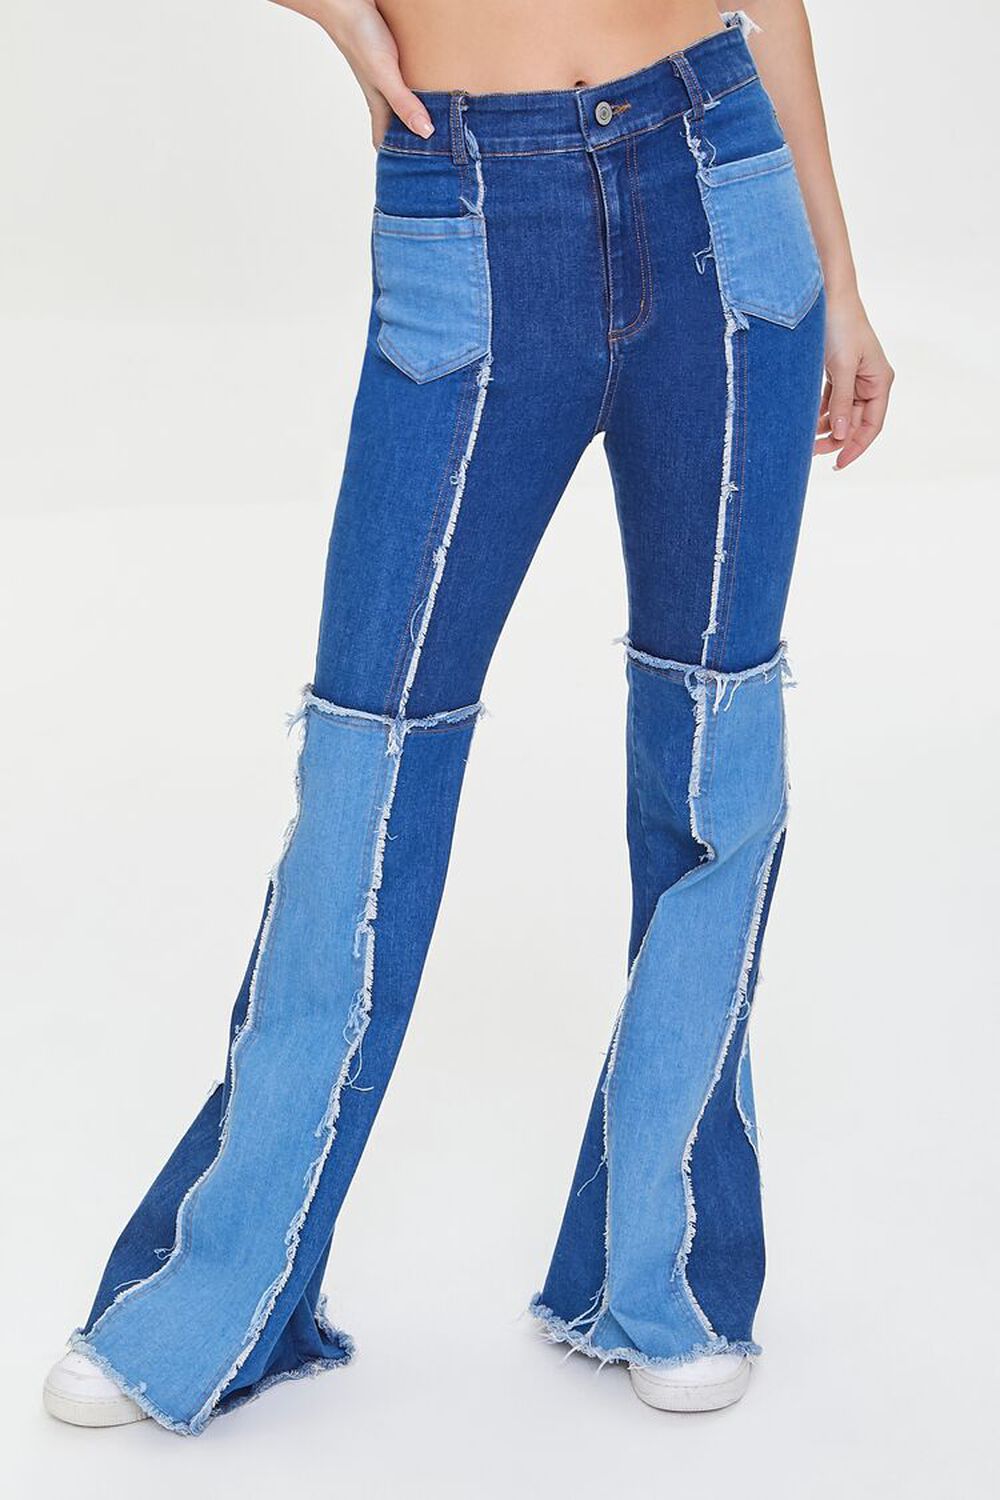 DENIM/MULTI Patchwork Frayed Flare Jeans, image 2